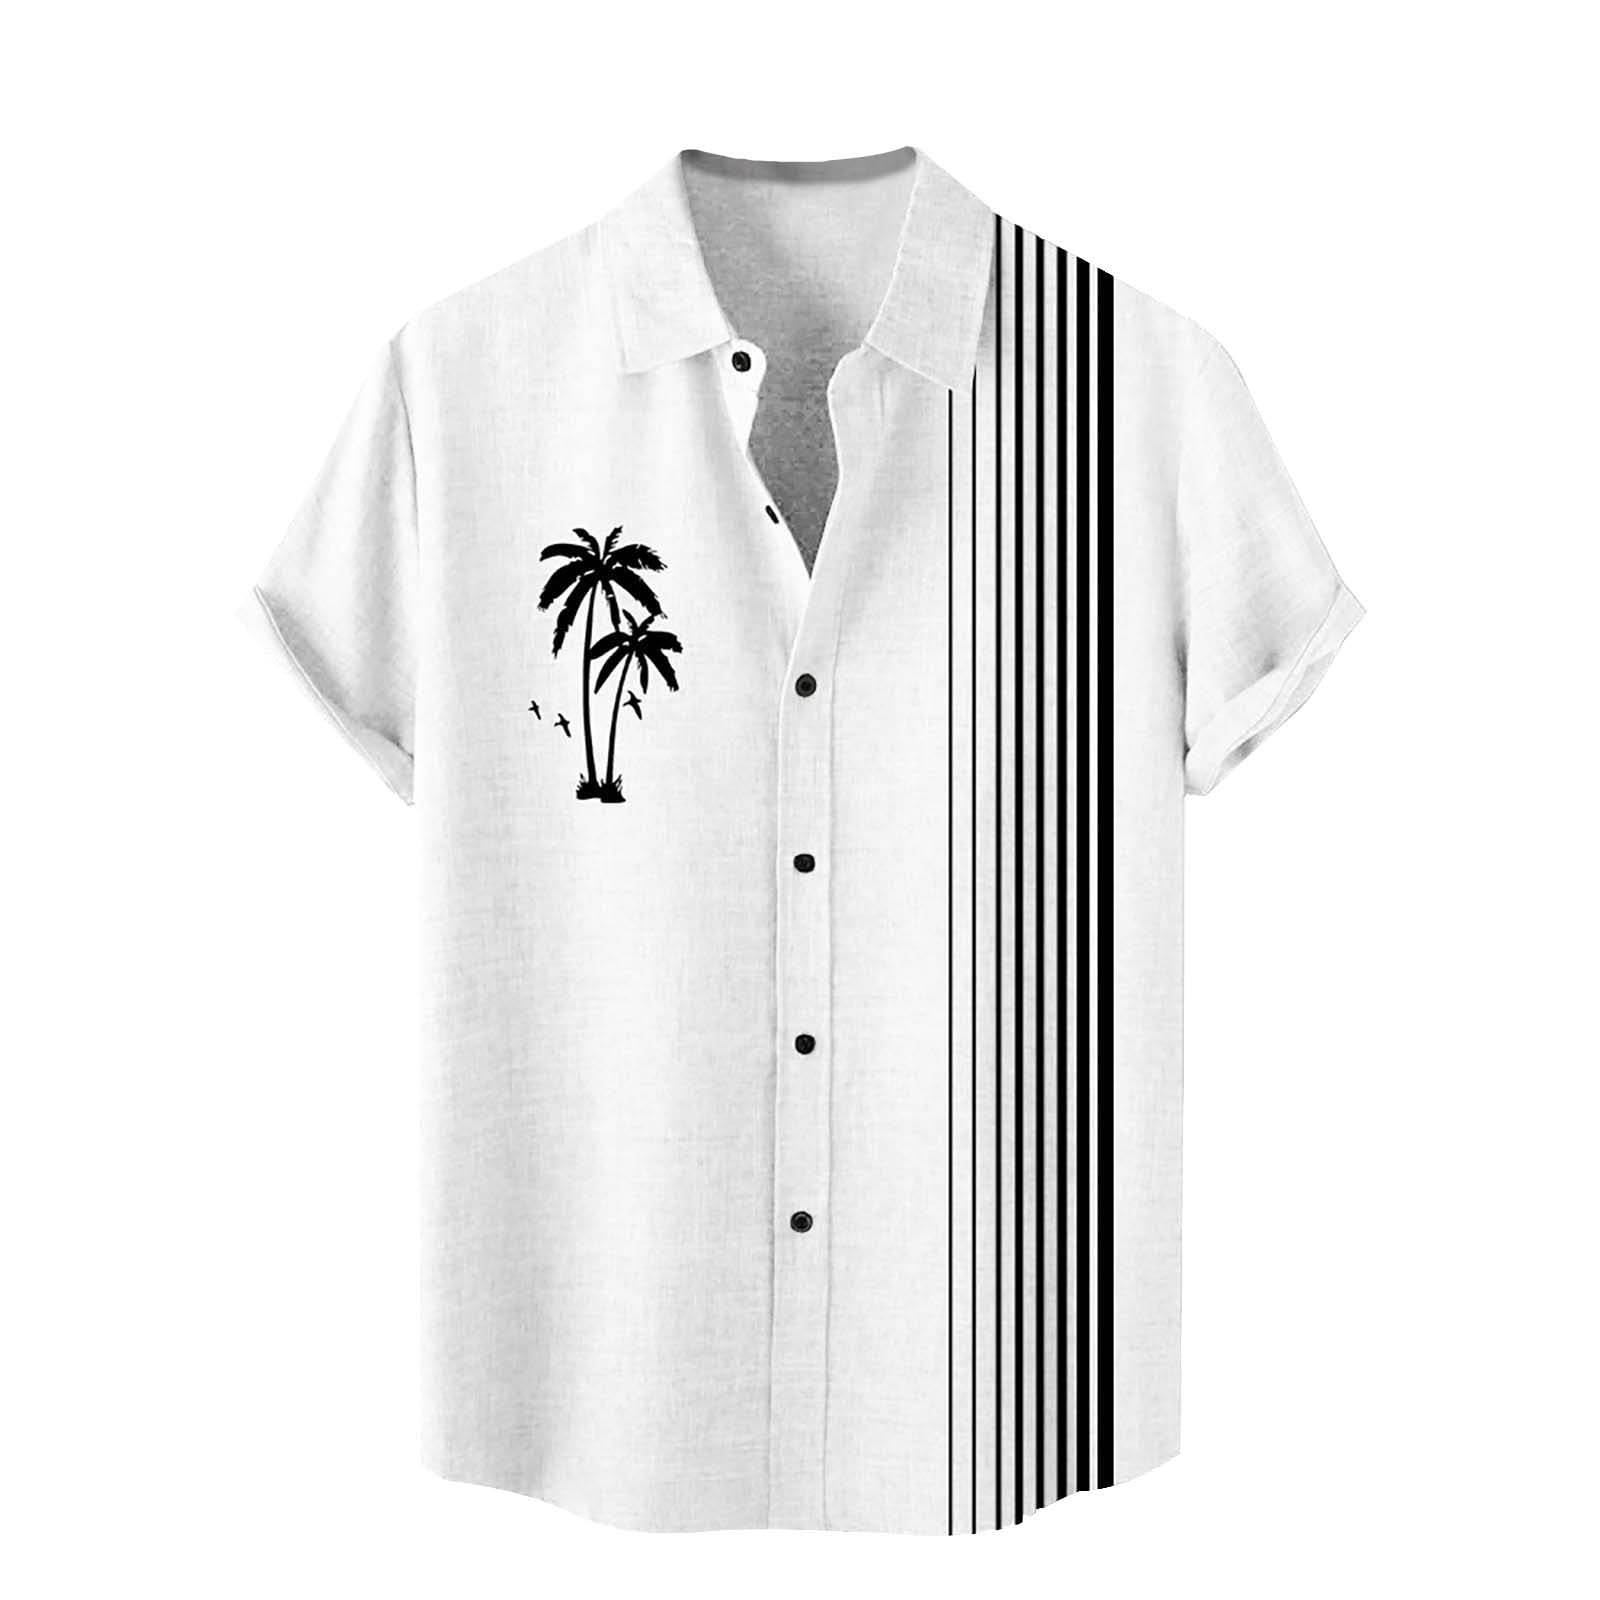 AdBFJAF Shirts for Men Graphic Tees On Back Men's Floral Shirts Button ...